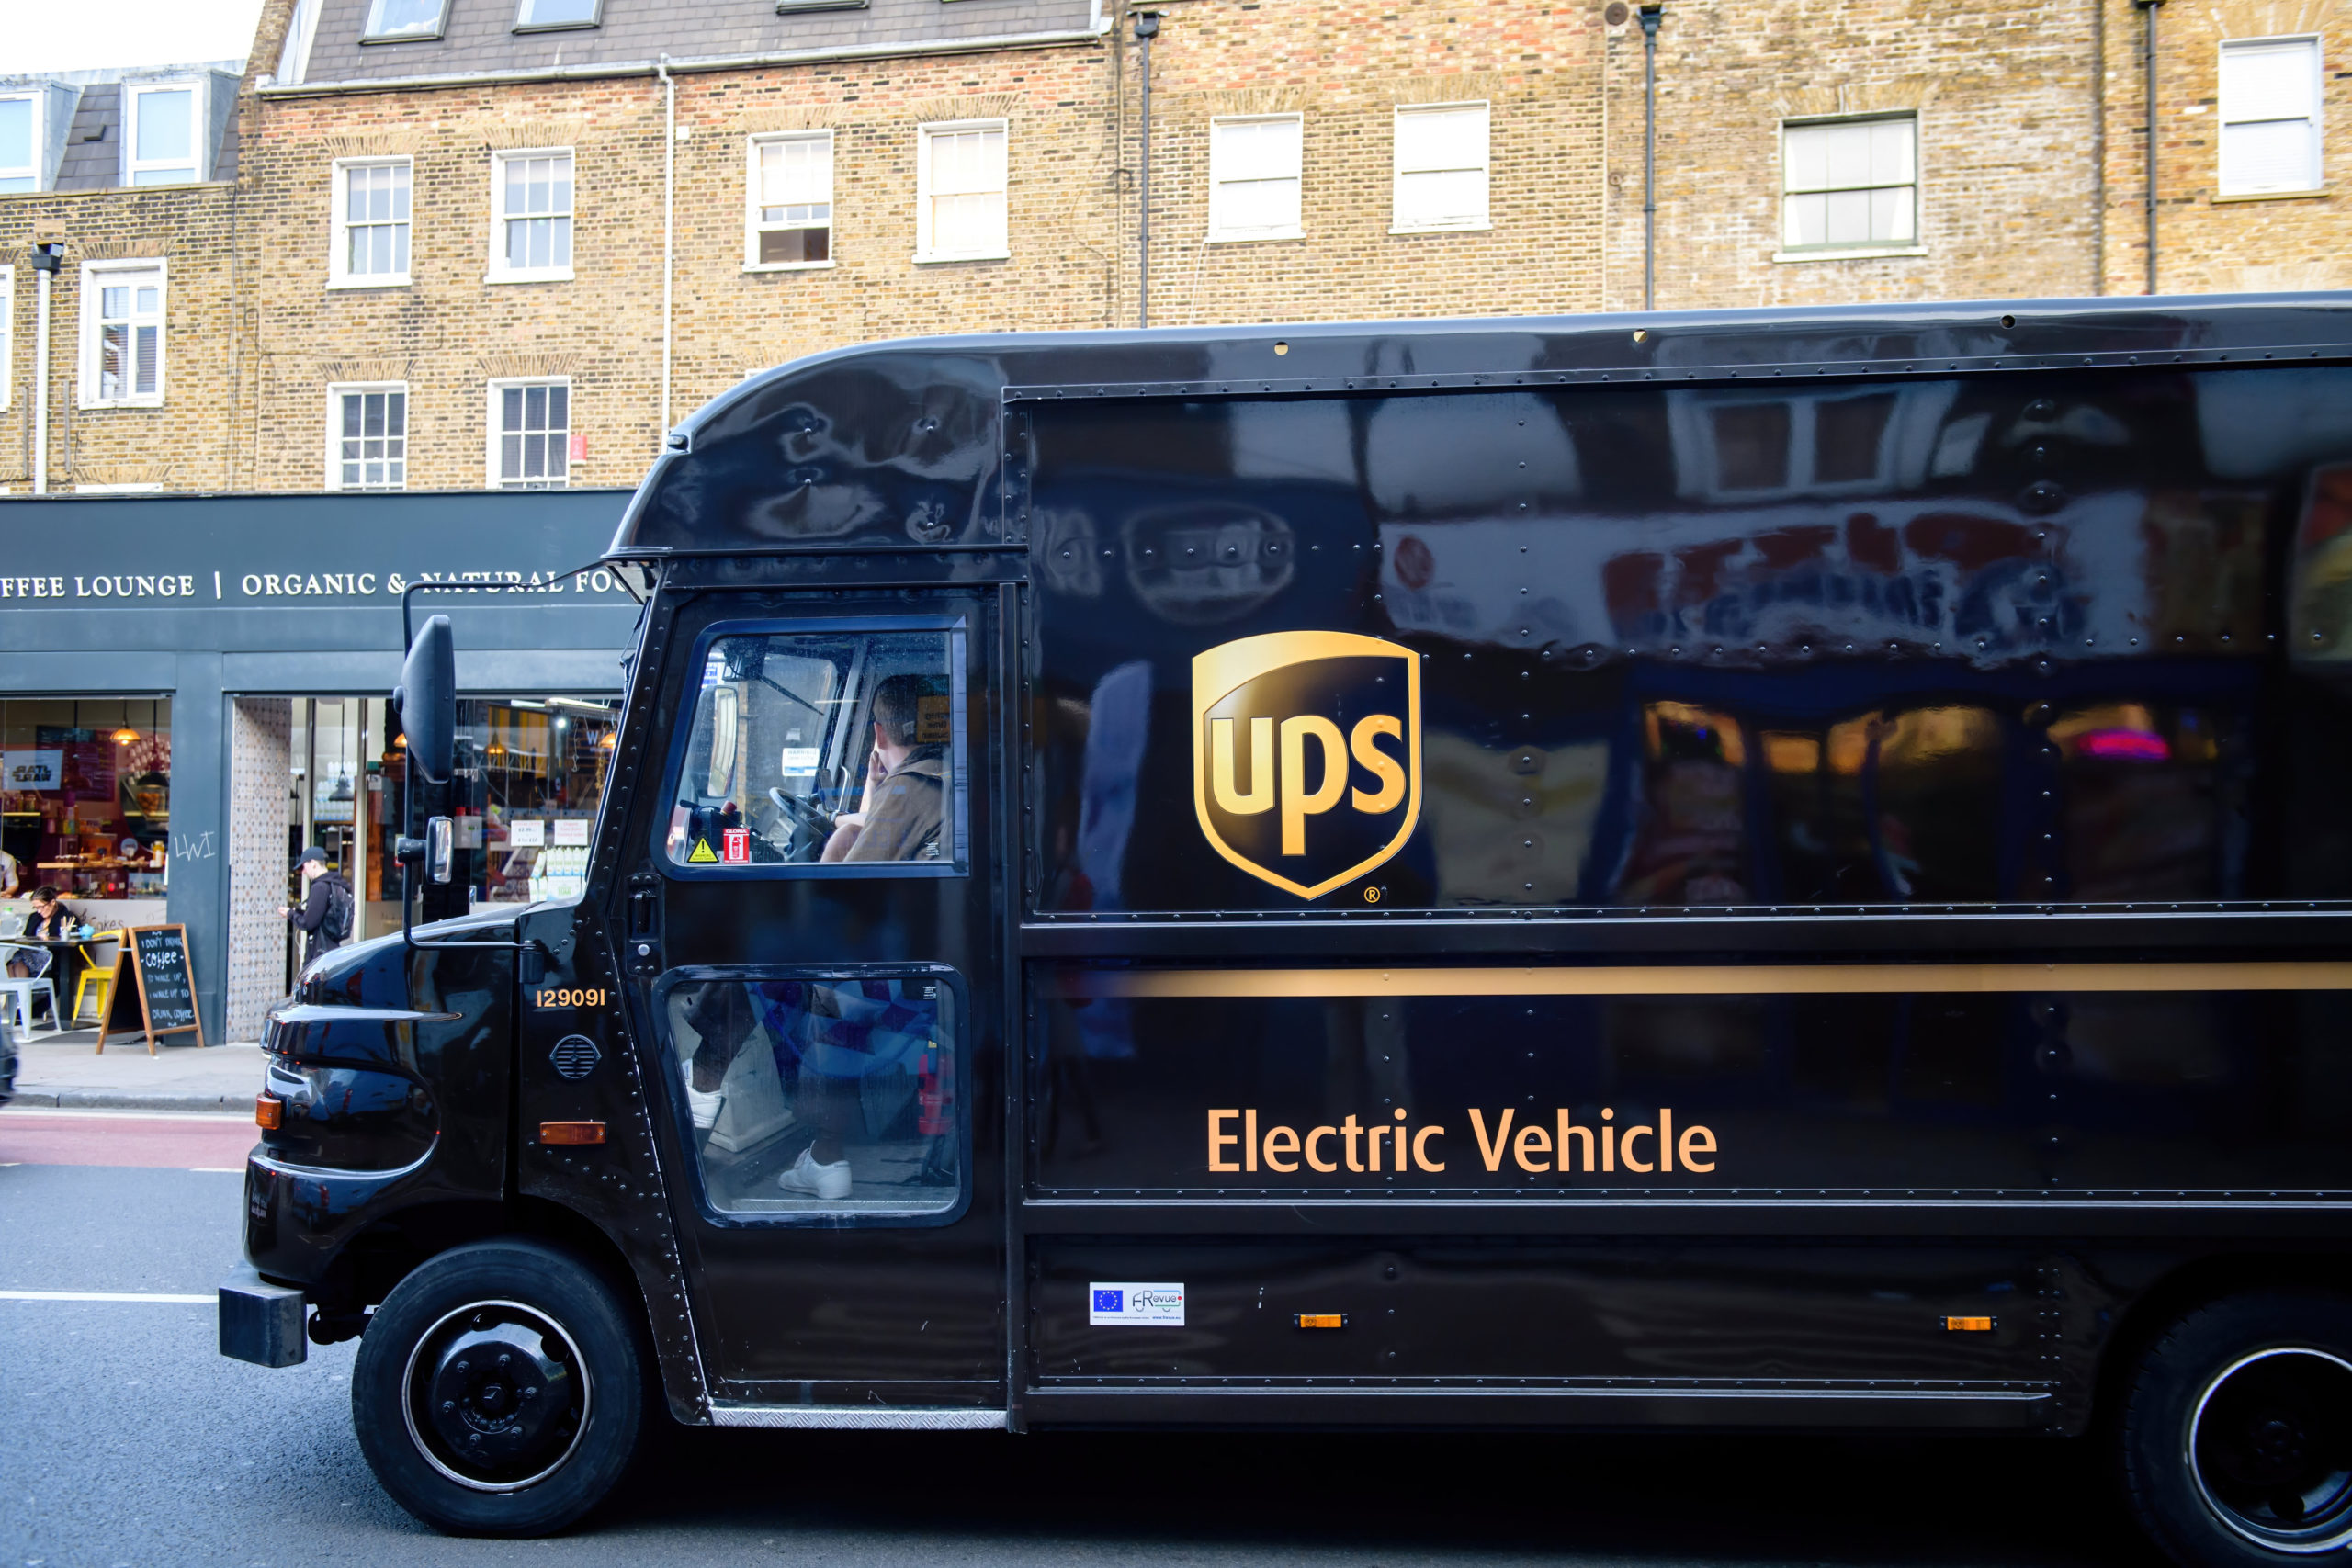 UPS' electric vehicle.